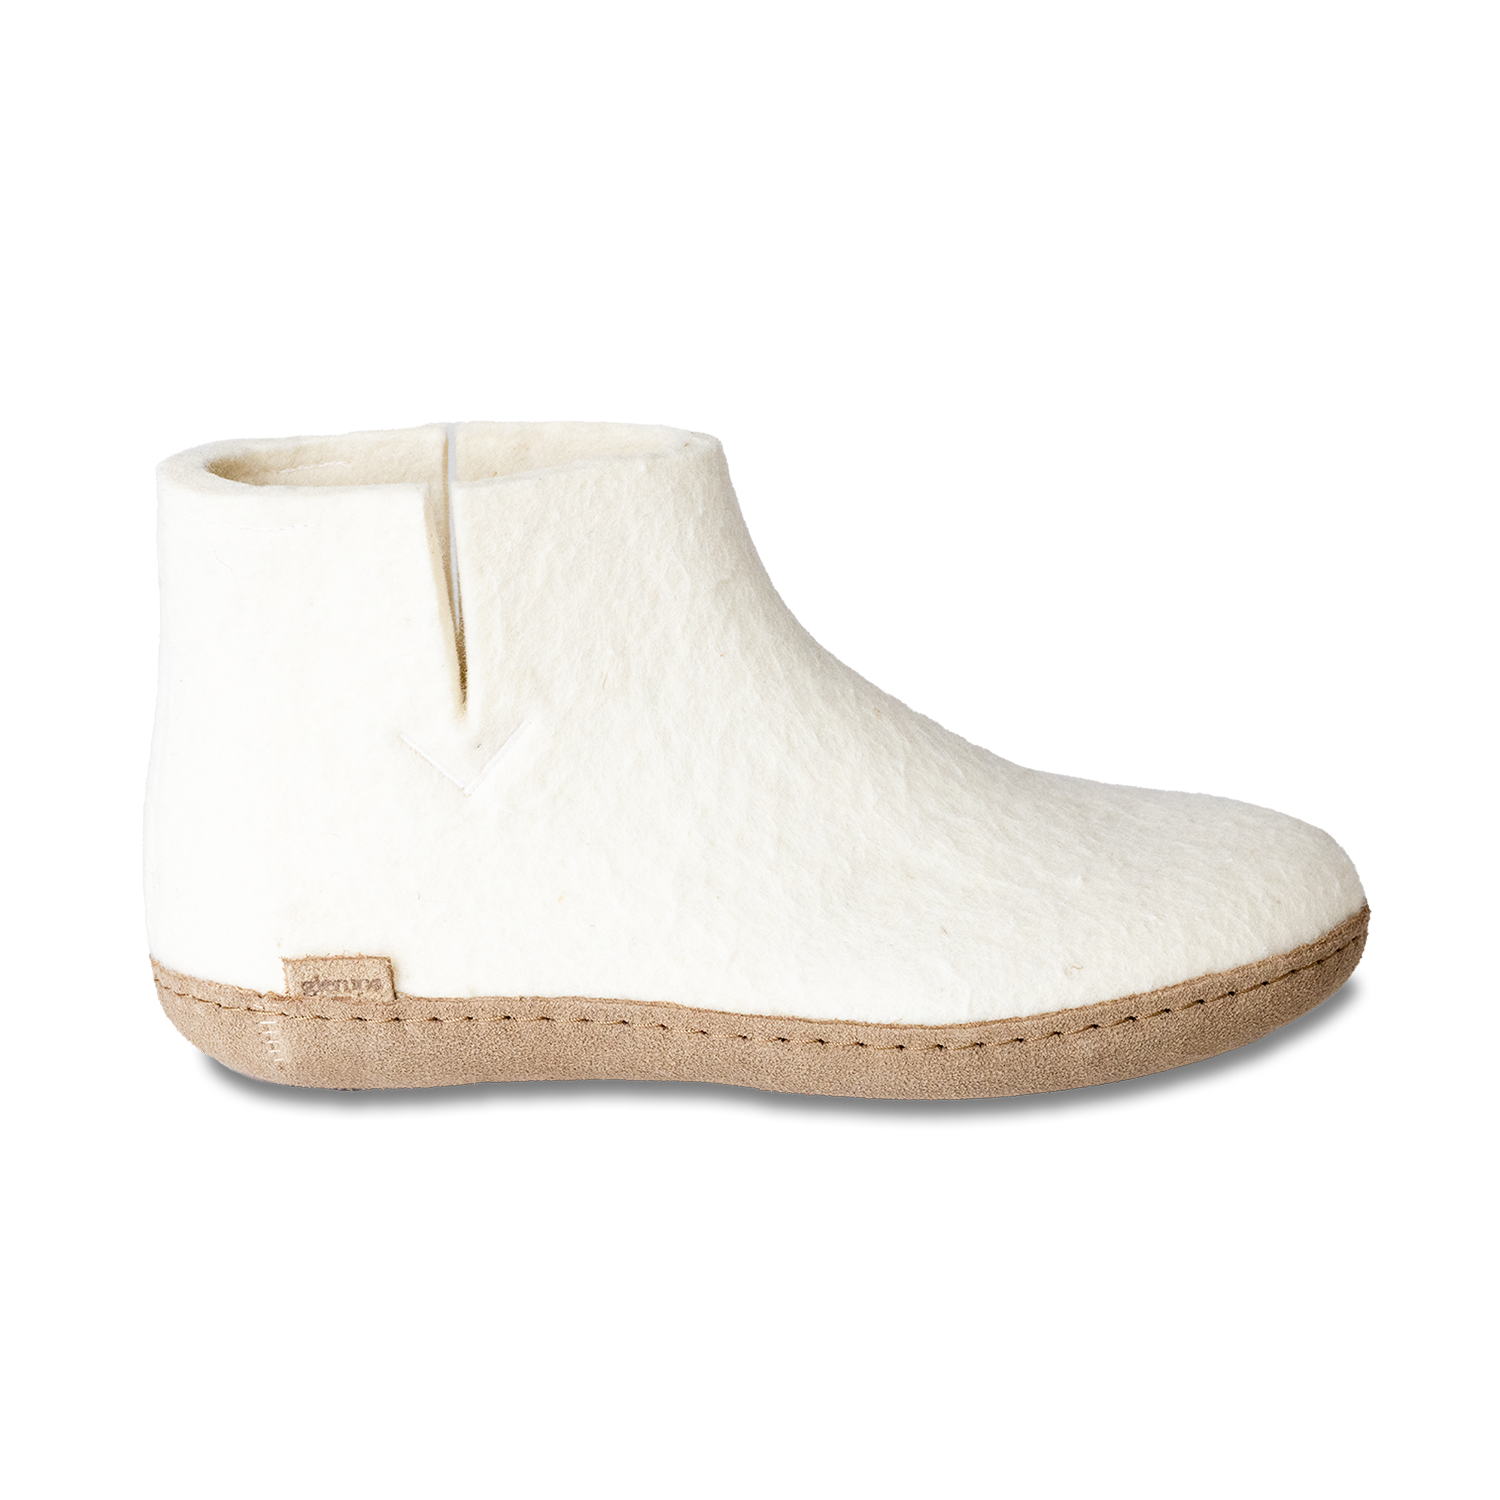 Glerups Boot White